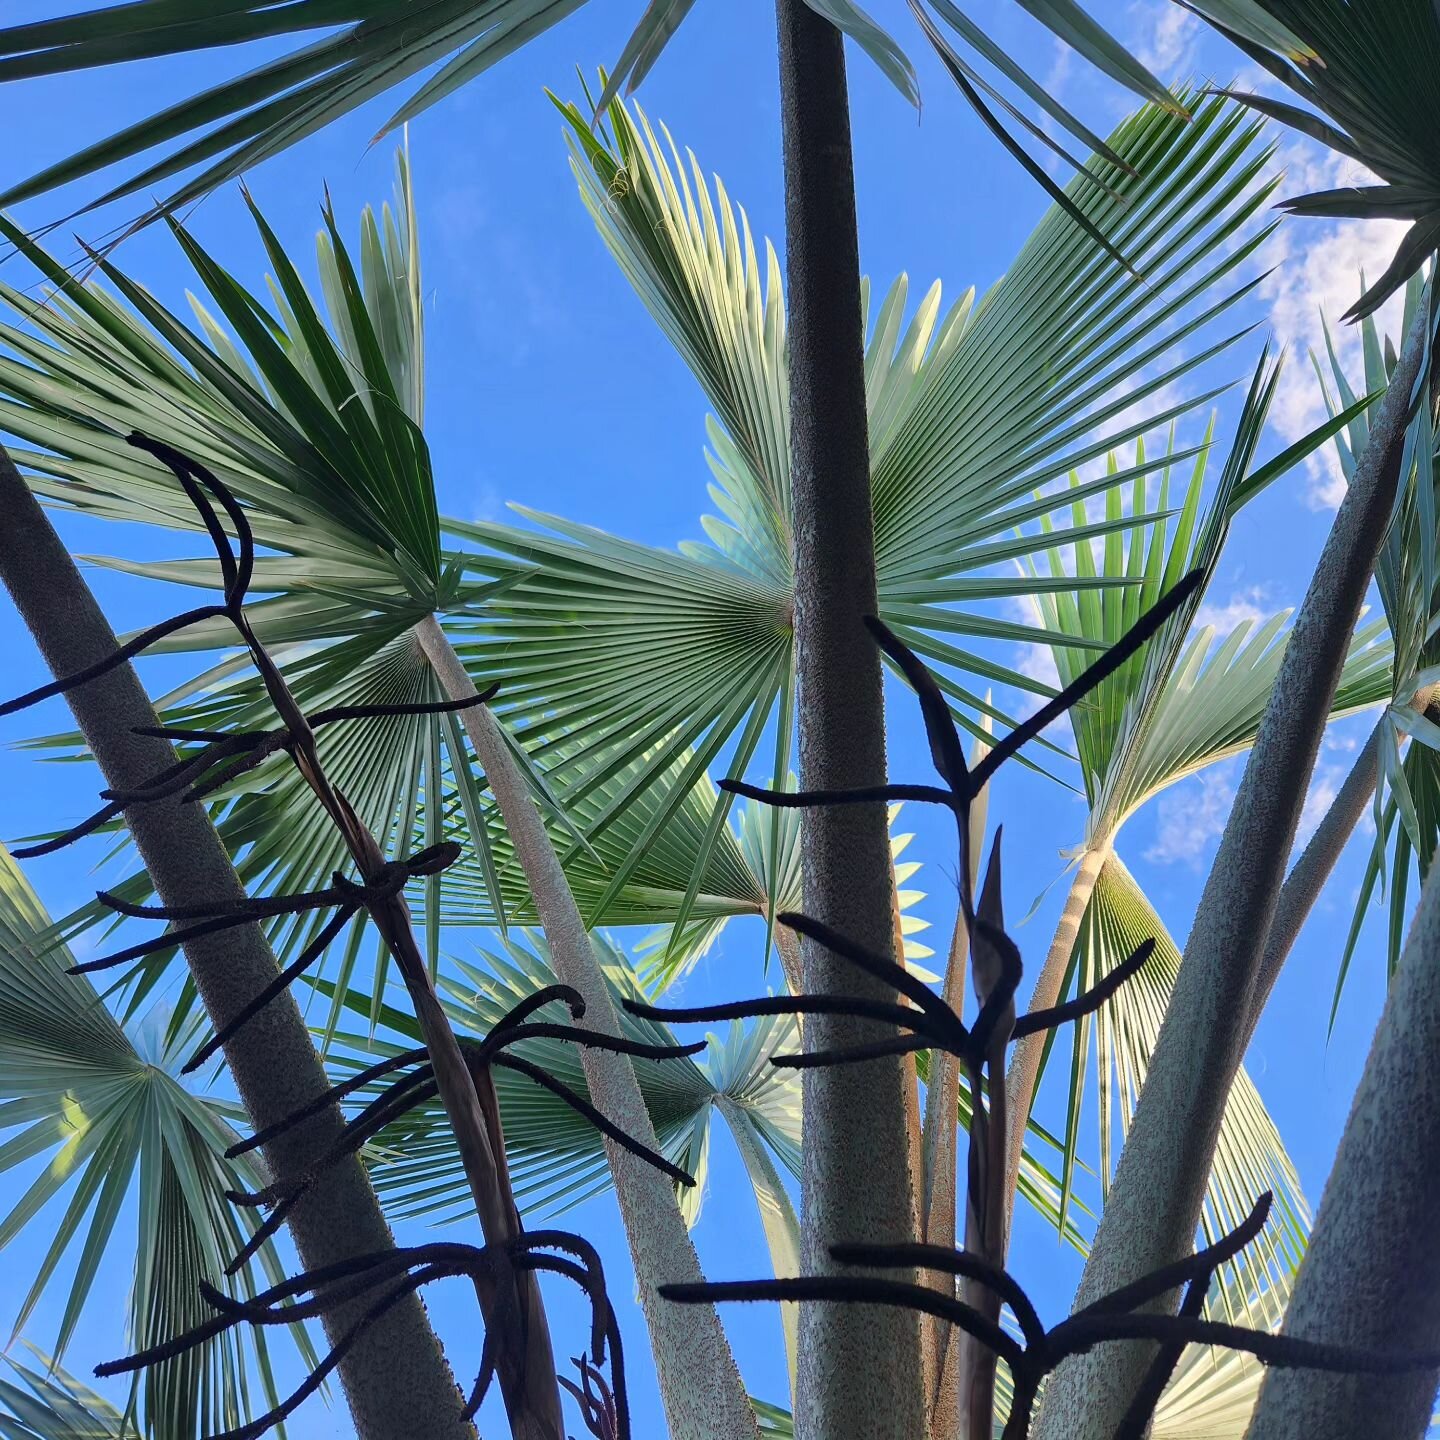 ...Getting lost in the fan palms 🌴 #fan palms #palmtrees #island #botanical #tree #fans #islandvibes #islandlife #hiking #vegetation #leaves #instamood #blueday